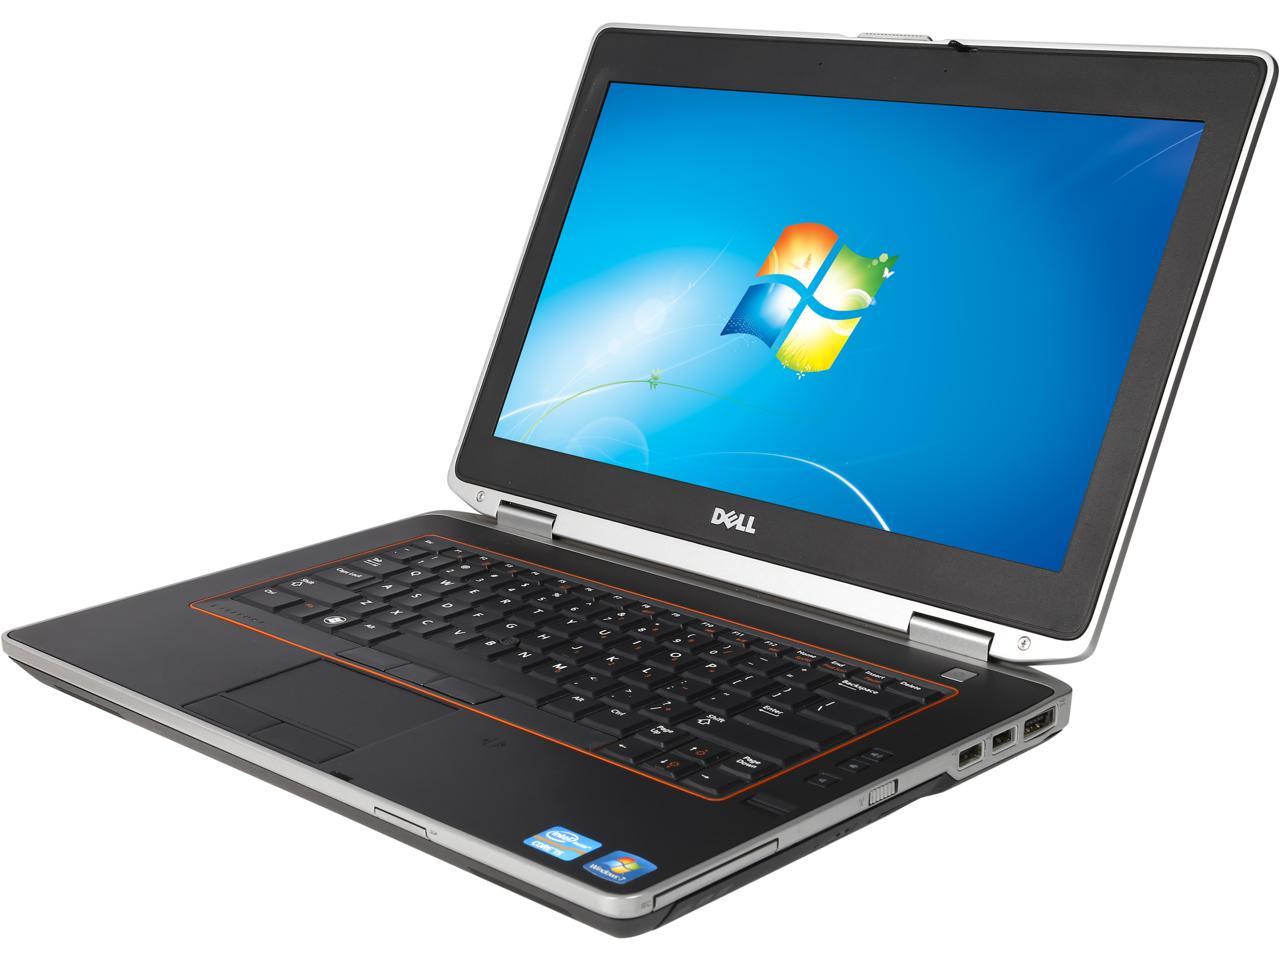 DELL Laptop Latitude E6420 Intel Core i5 2nd Gen 2520M (2.50 GHz) 4 GB Memory 320 GB HDD 14.0" Windows 7 Professional 64-Bit